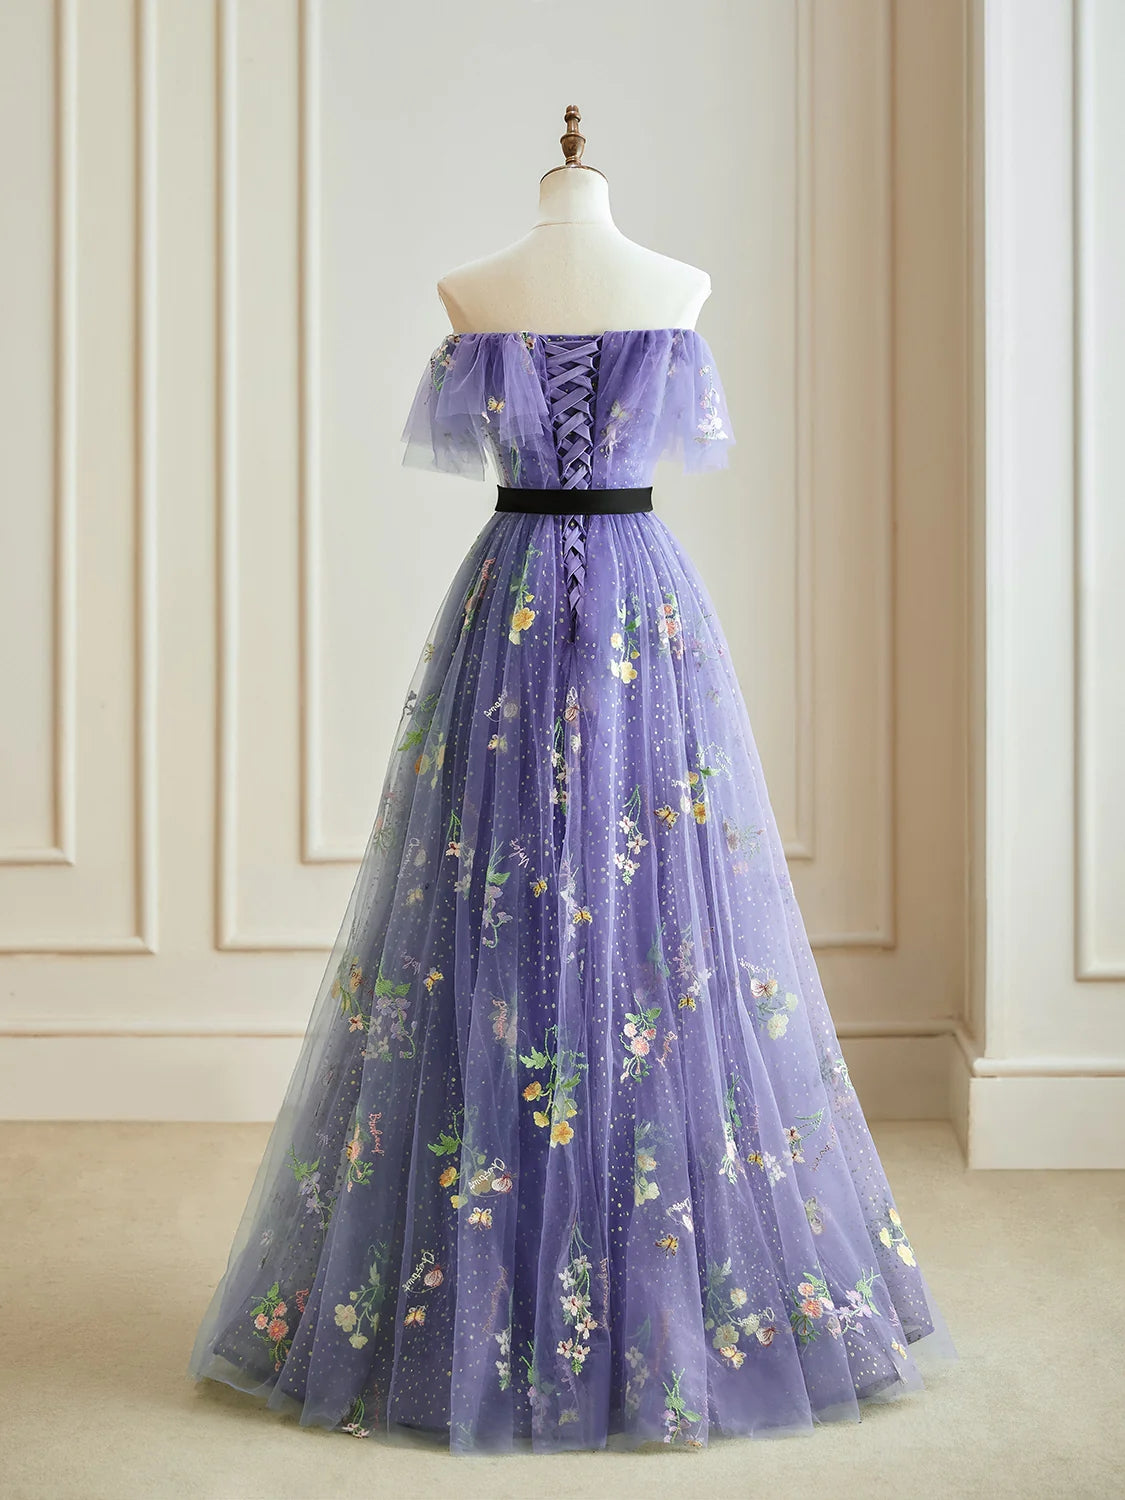 Princess A-line Tulle Lace Purple Long Prom Dress, Purple Long Formal Dress Party Dress Banquet Dress      fg4942